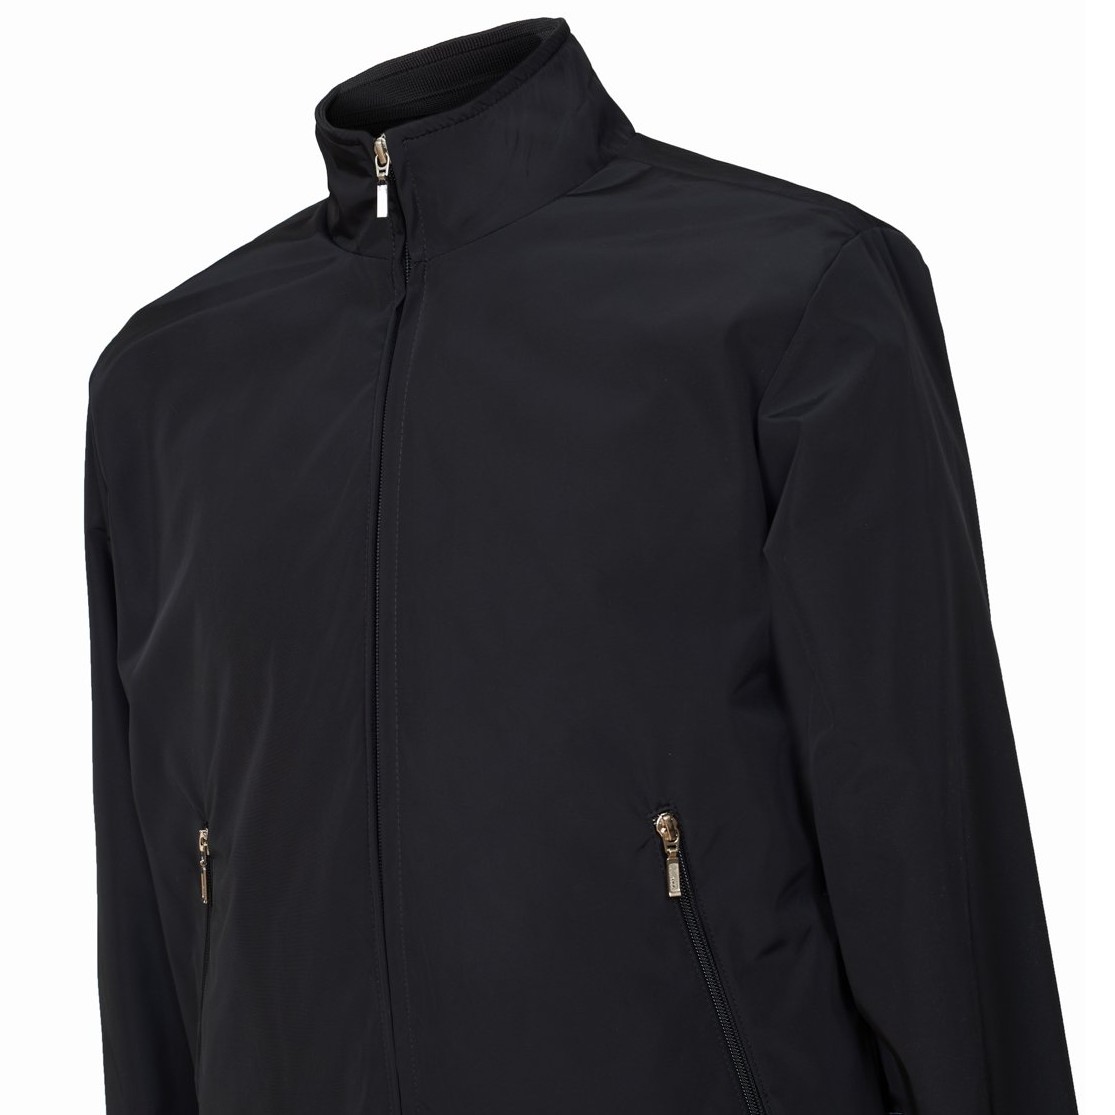 Unisex Fine Polyester Jacket - Delicias Style - Black Color